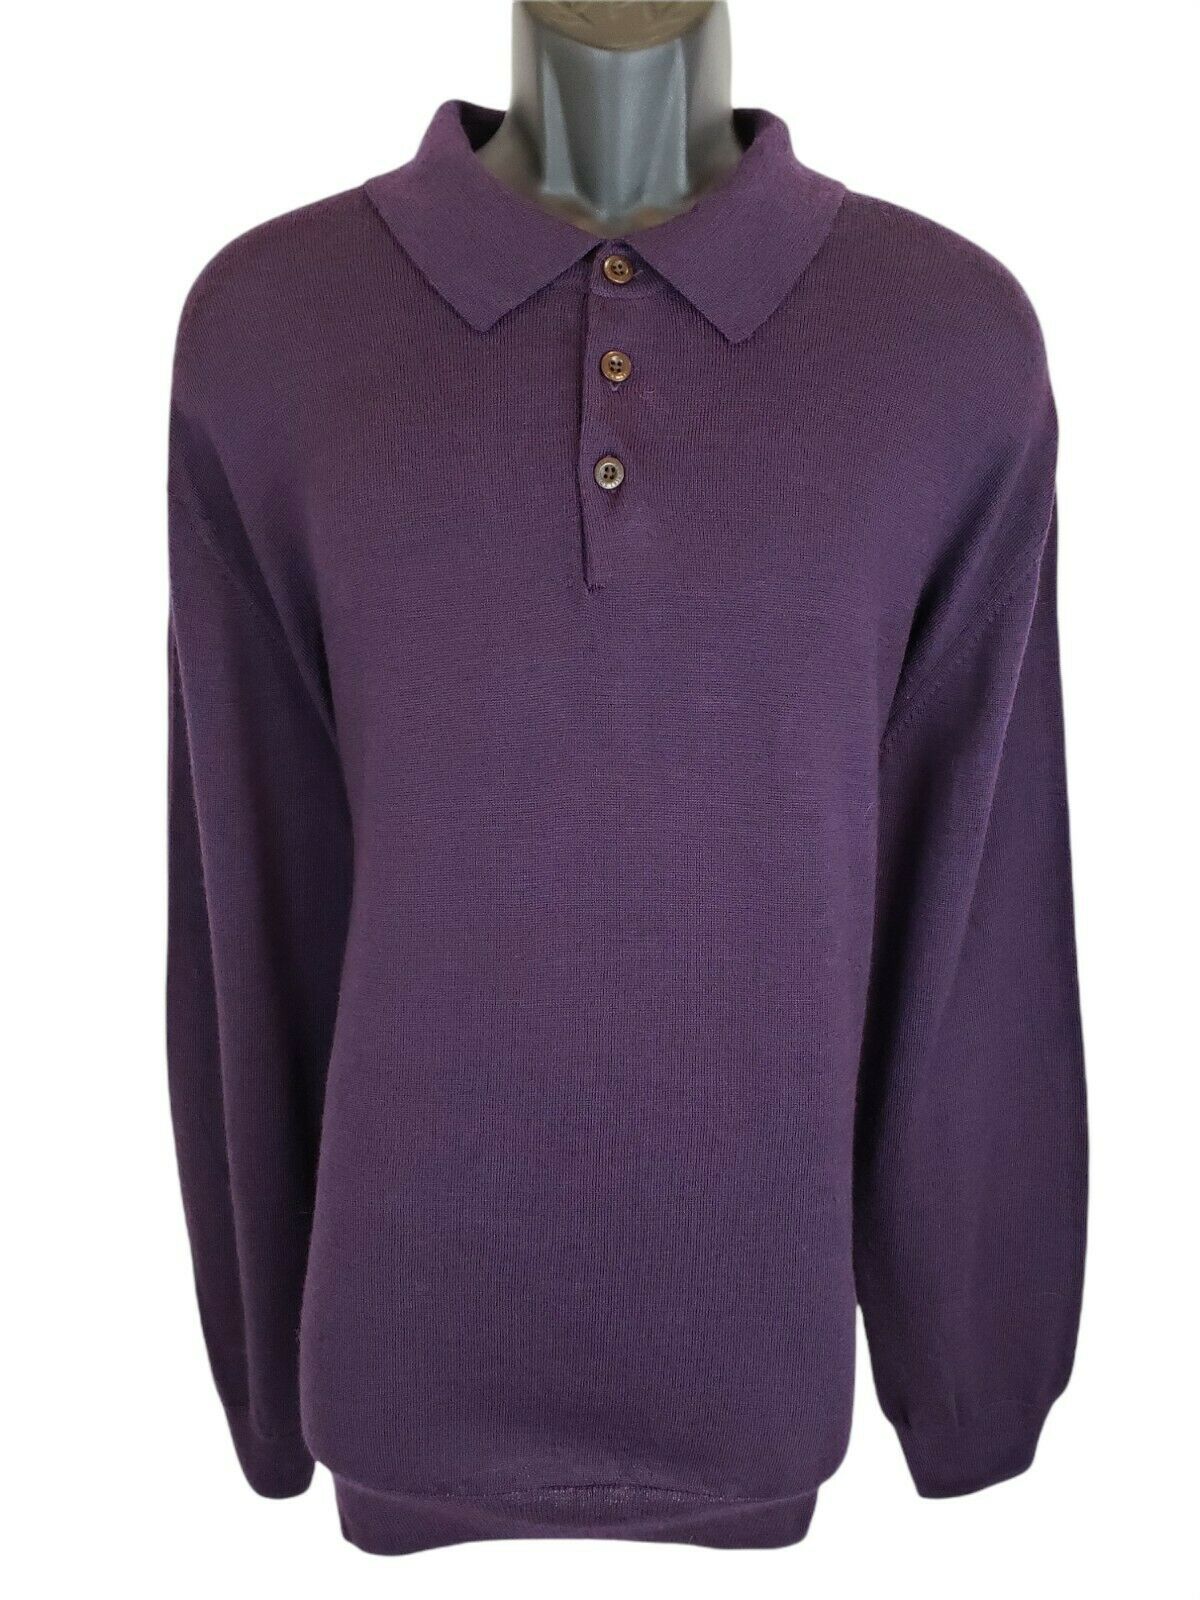 Orvis Mens Sweater Xxl New 100% Merino Wool Purple Pullover Long Sleeve Polo